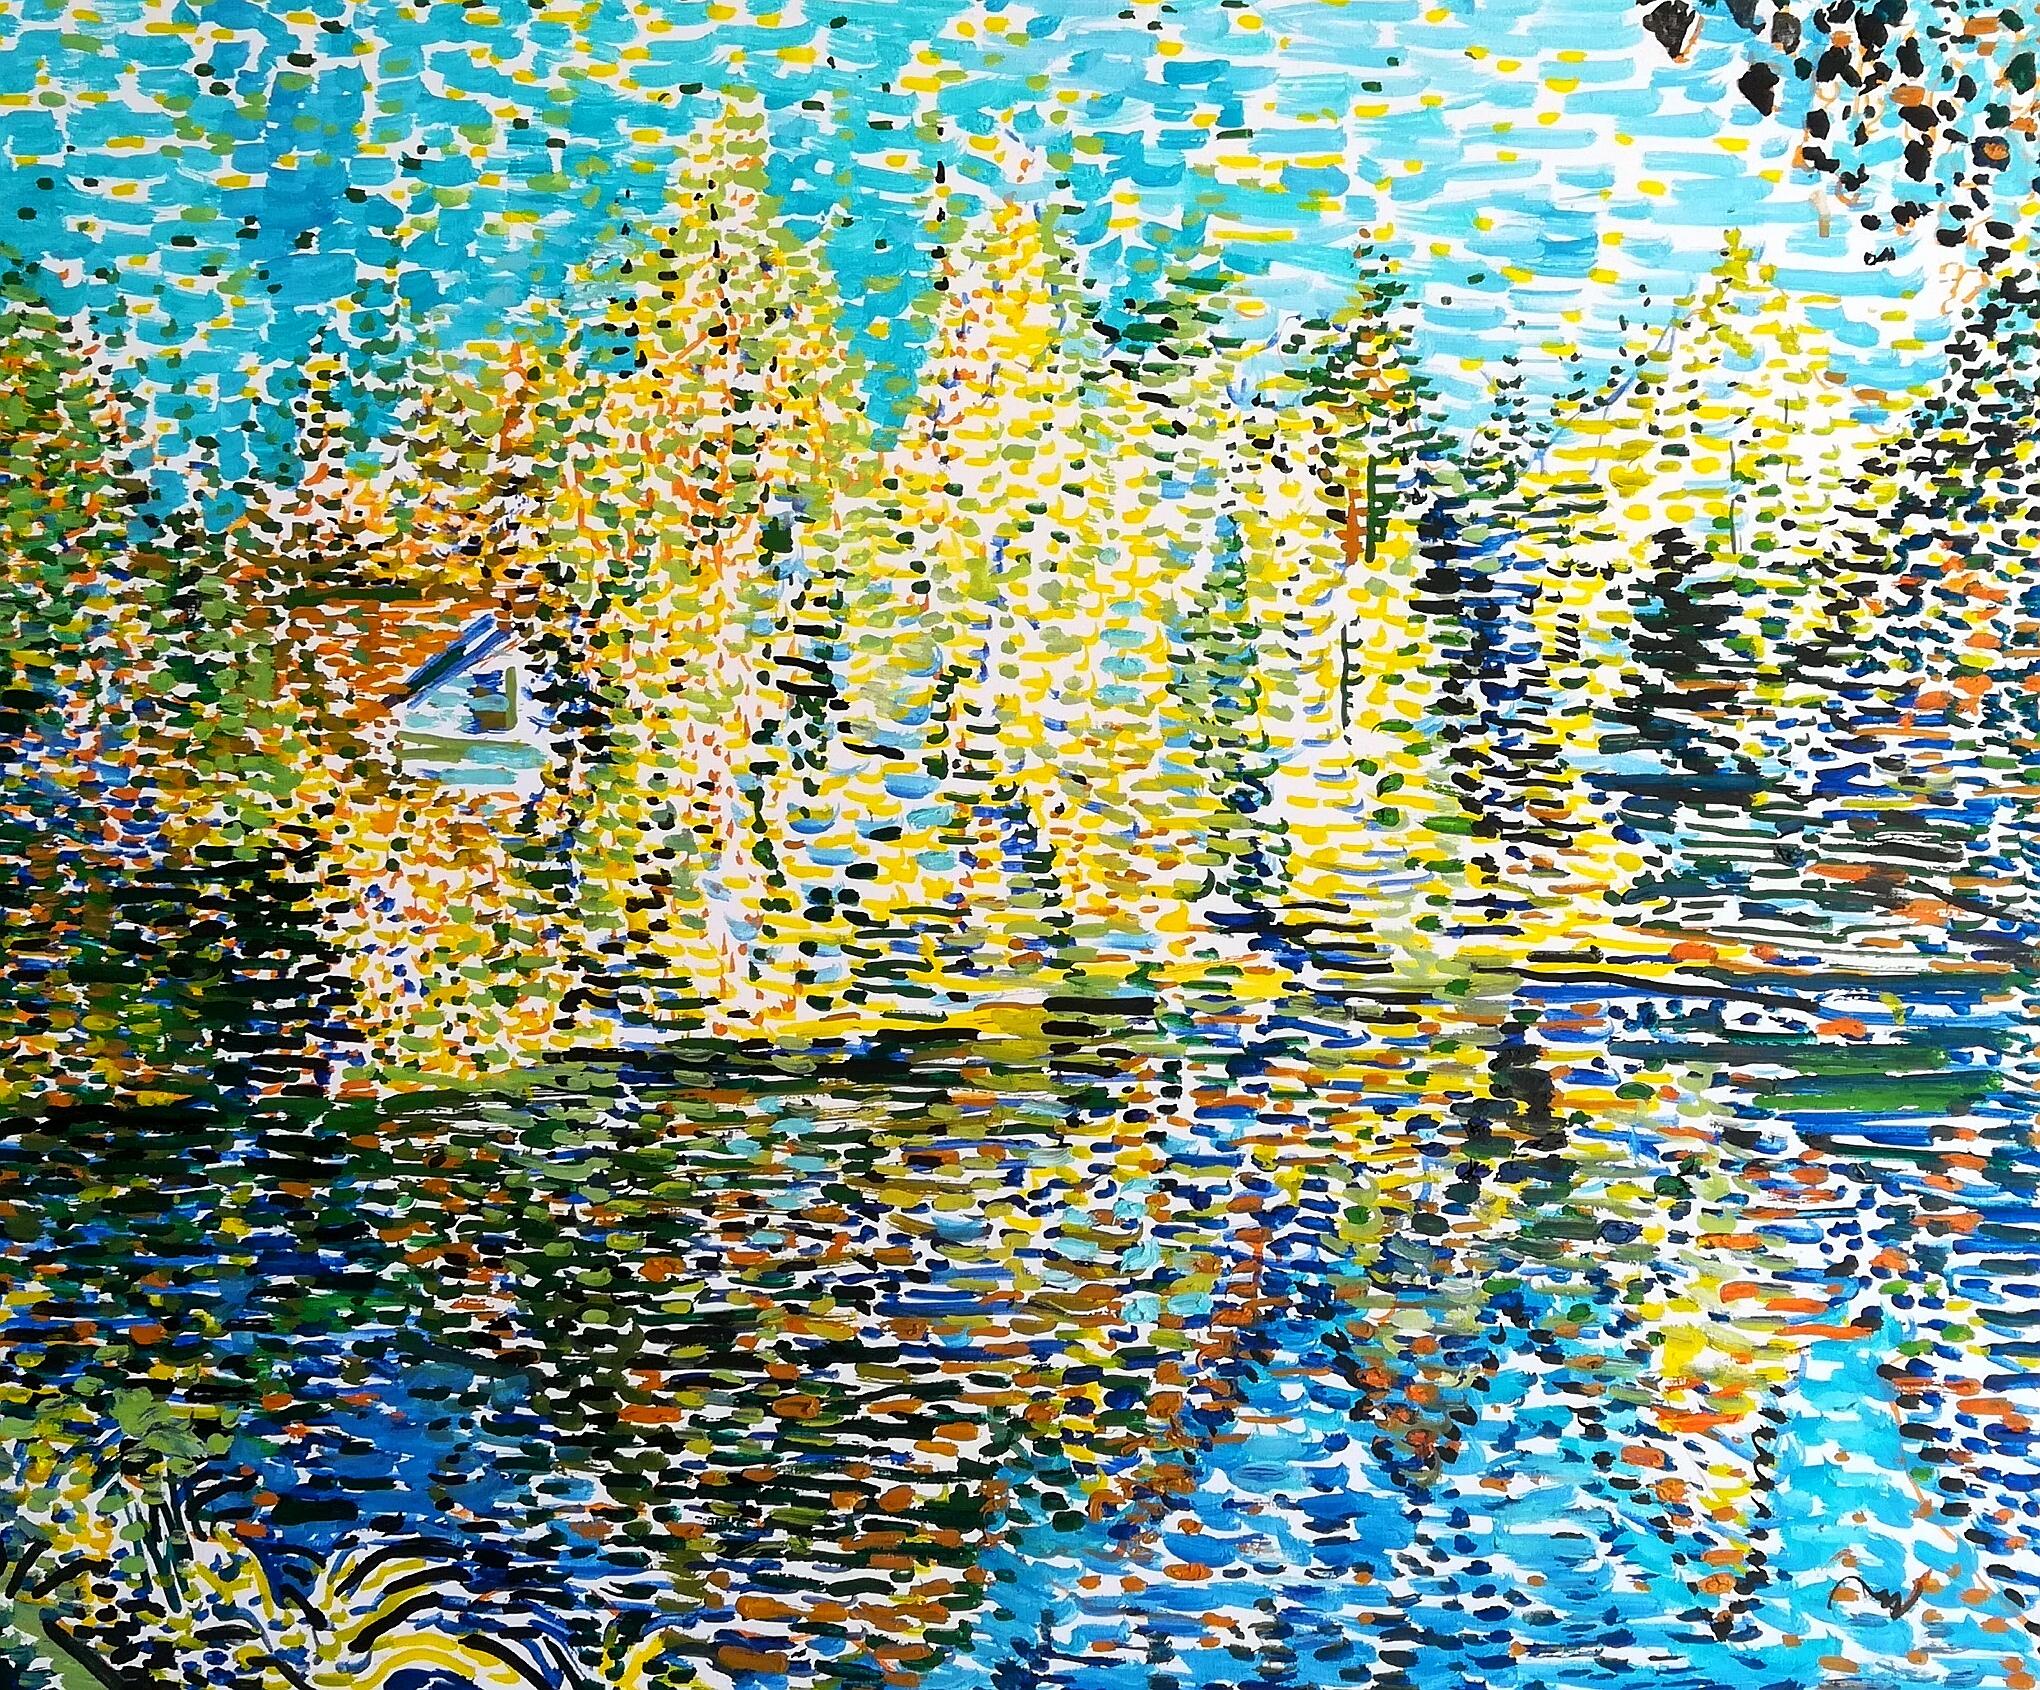 Nikol Klampert Landscape Painting - Water Pond - 21st Century Contemporary Pointillism Nature Oil Painting